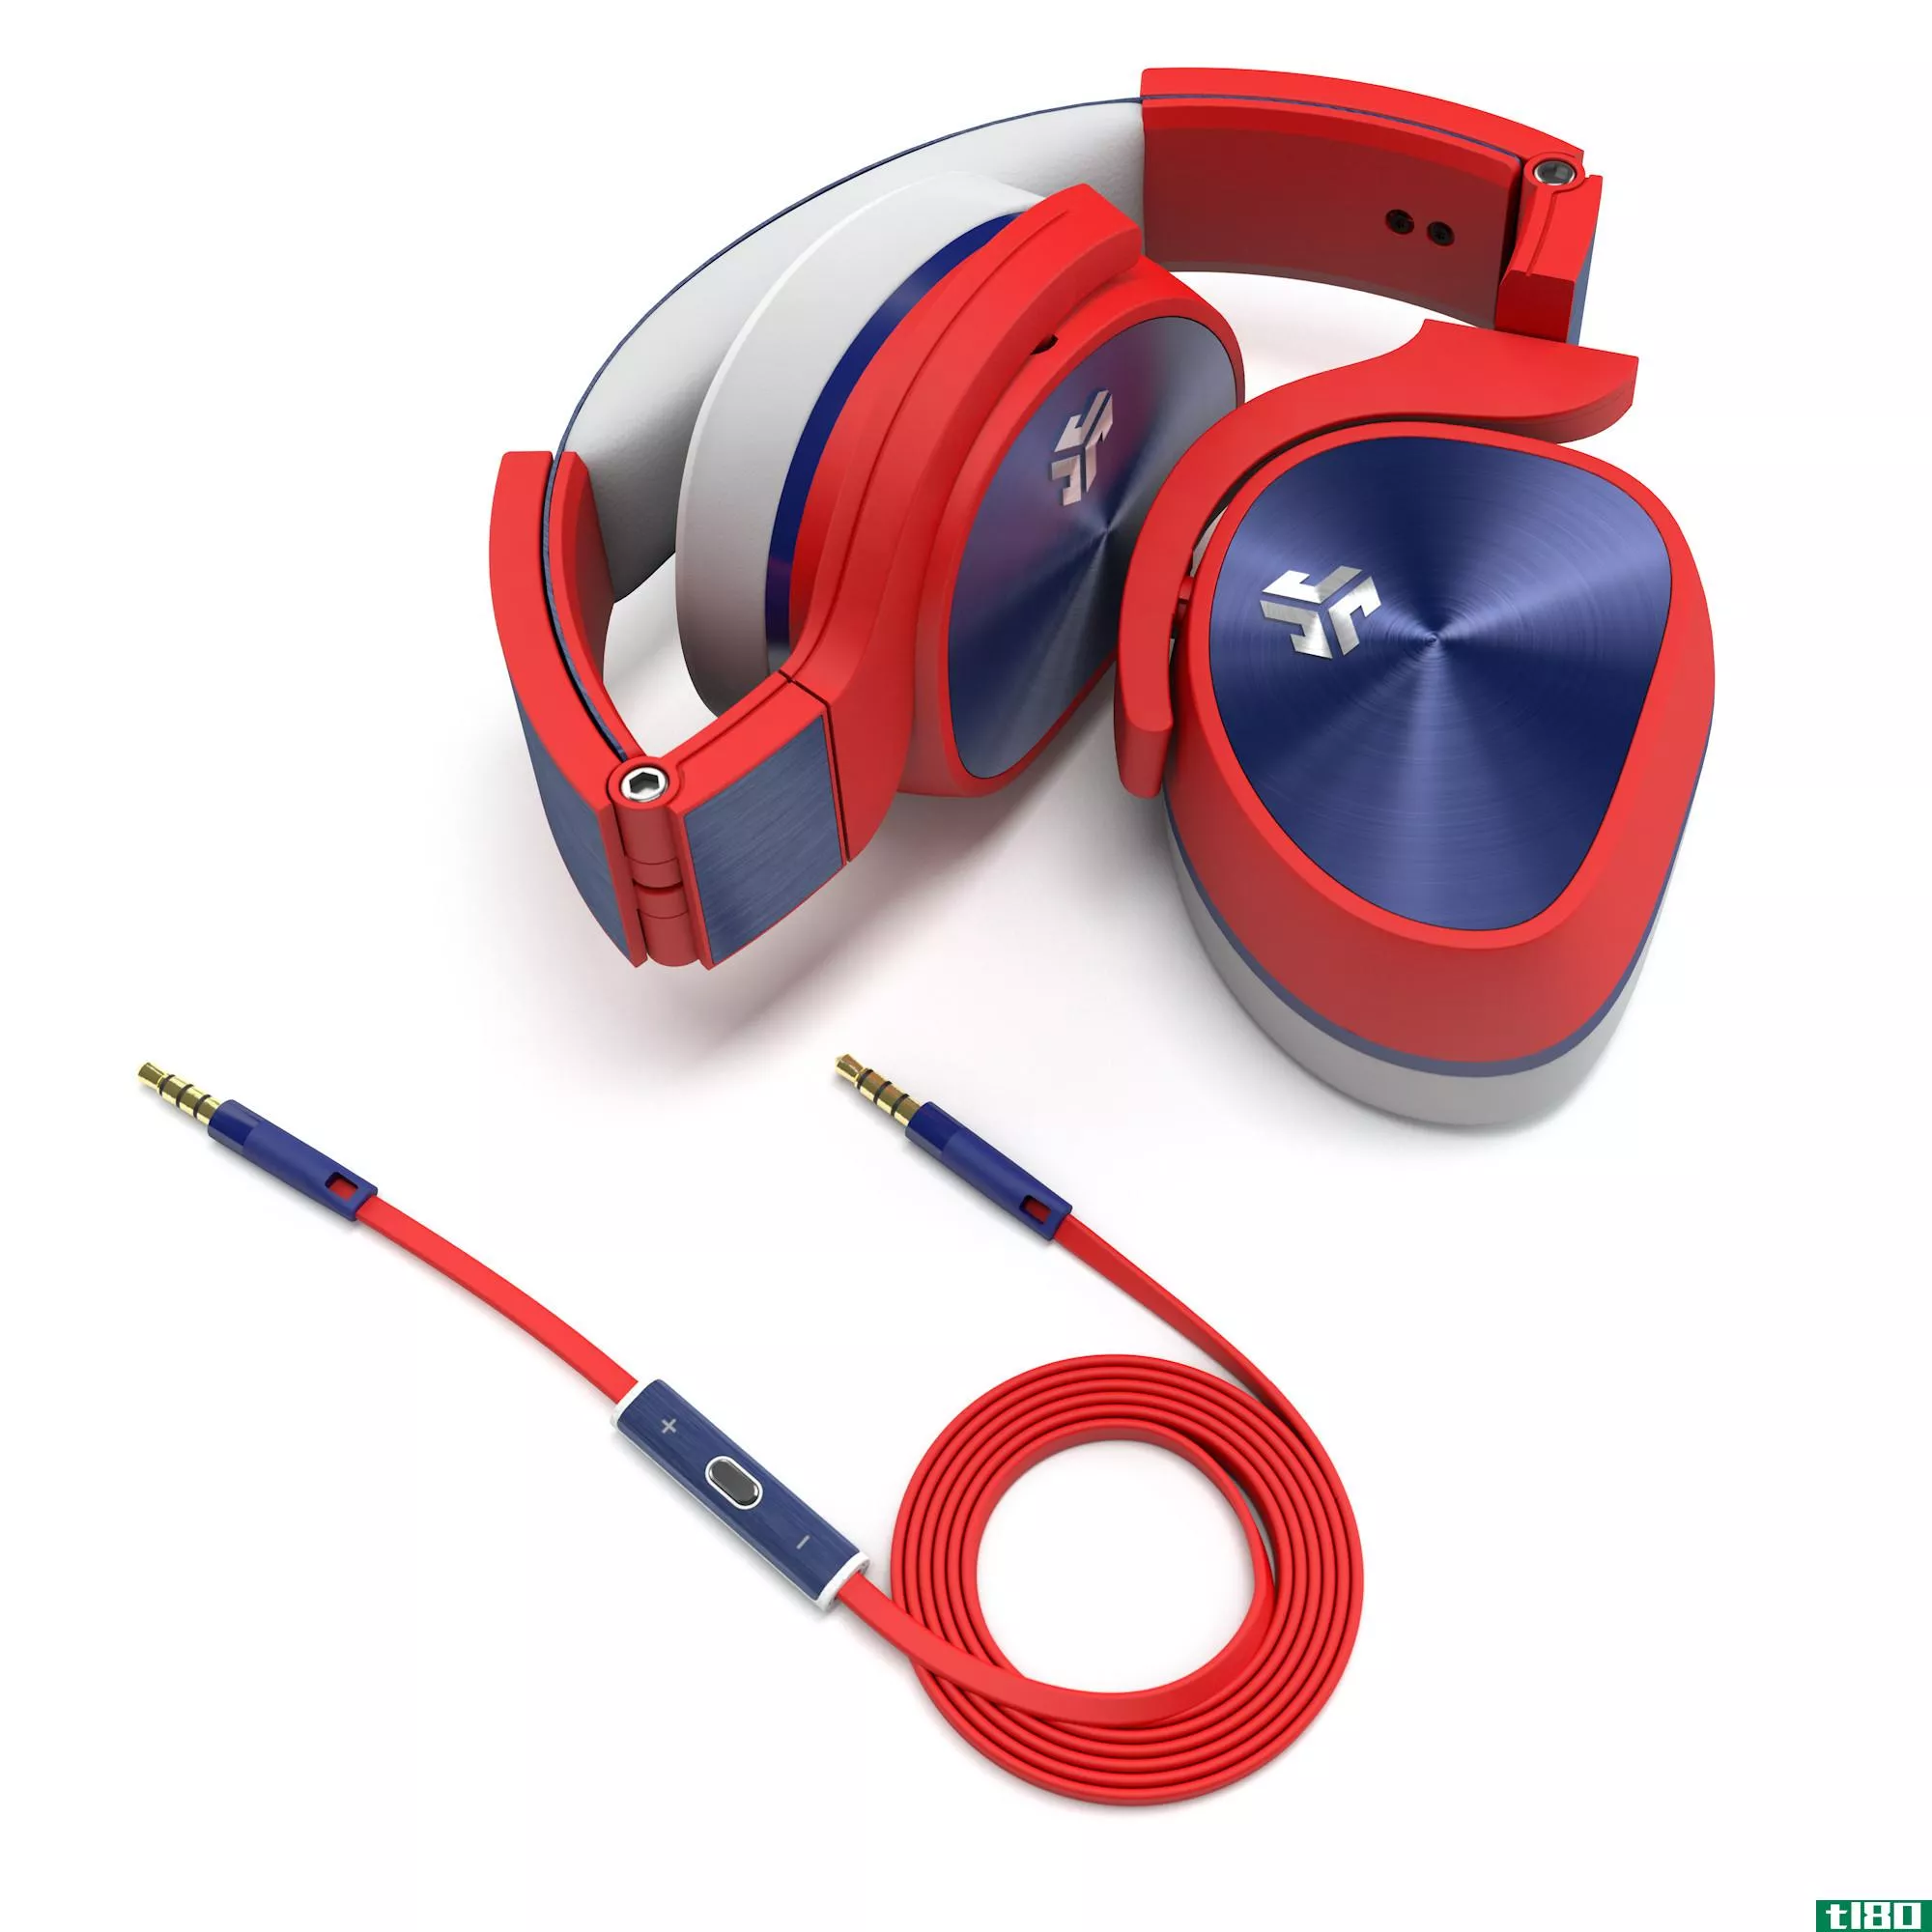 jlab audio发布了一对新的消除噪音的蓝牙耳机